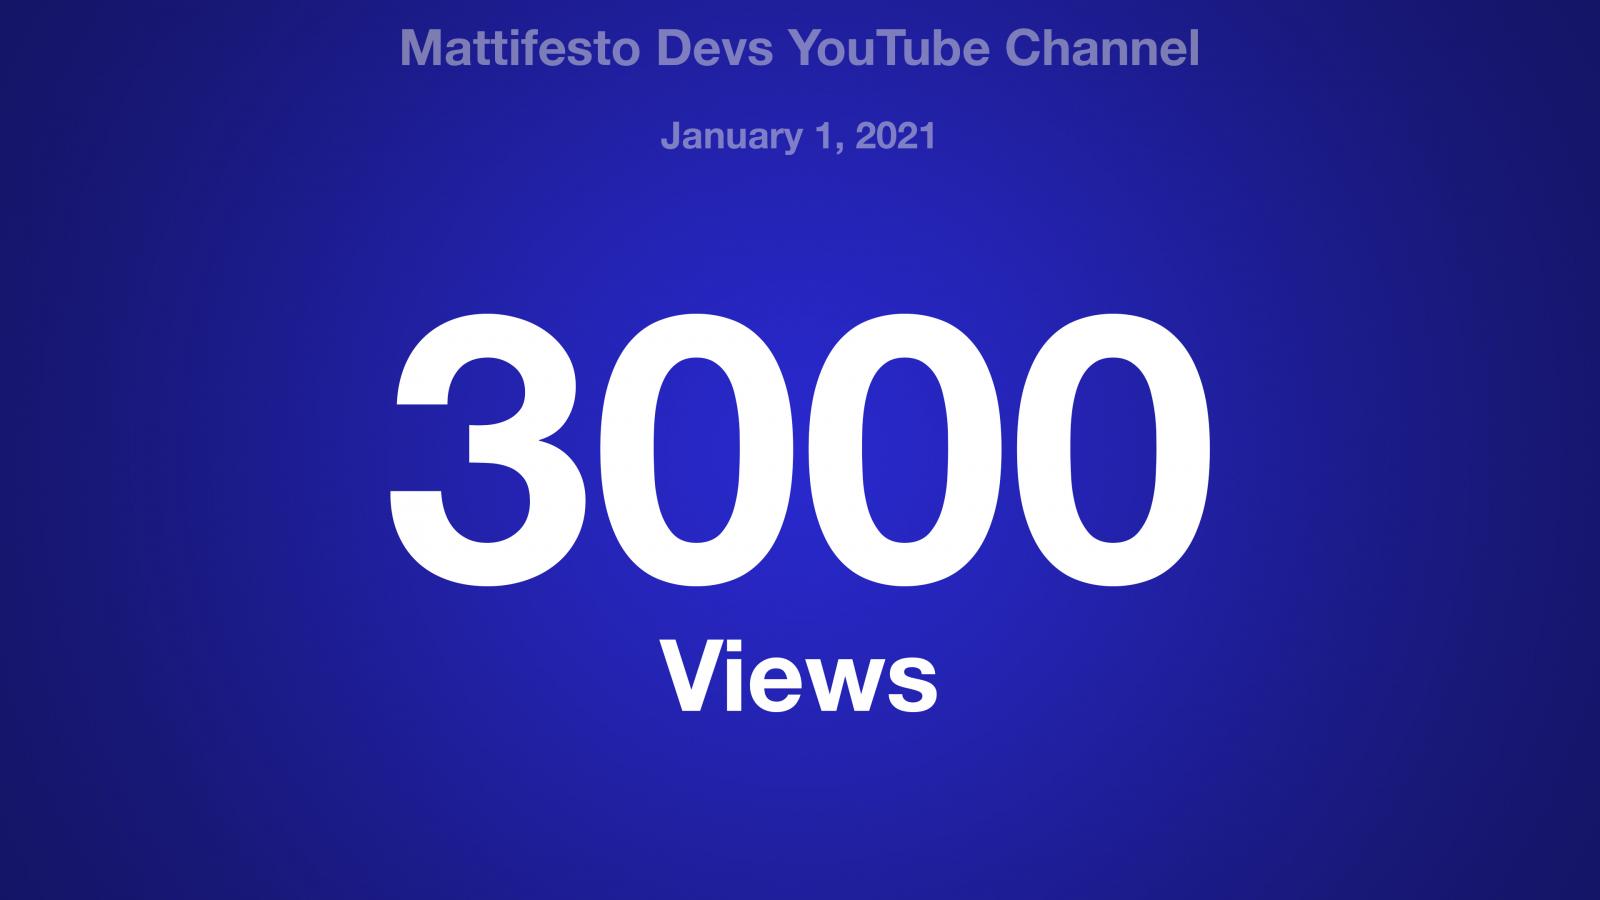 Mattifesto Devs YouTube Channel, January 1, 2021, 3000 Views